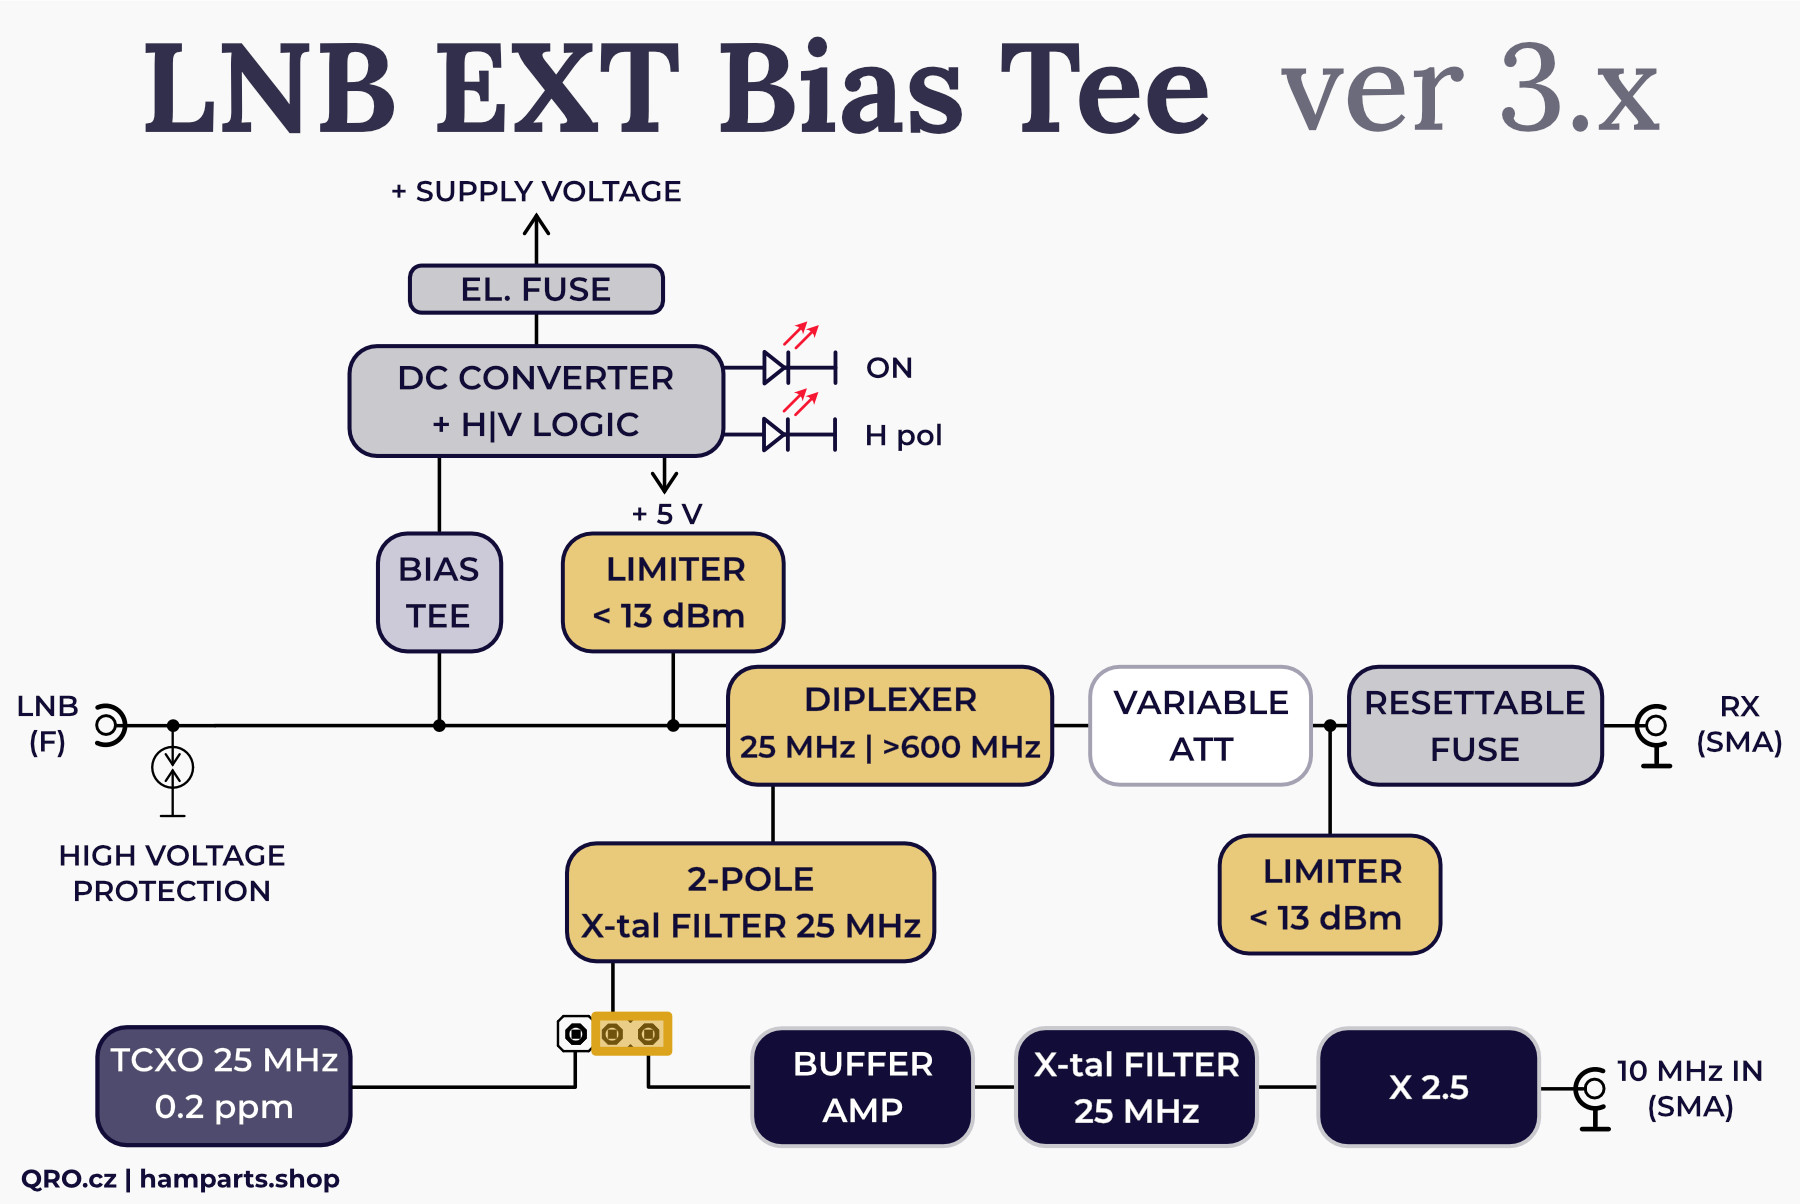 lnb bias tee box block diagram by qro.cz hamparts.shop